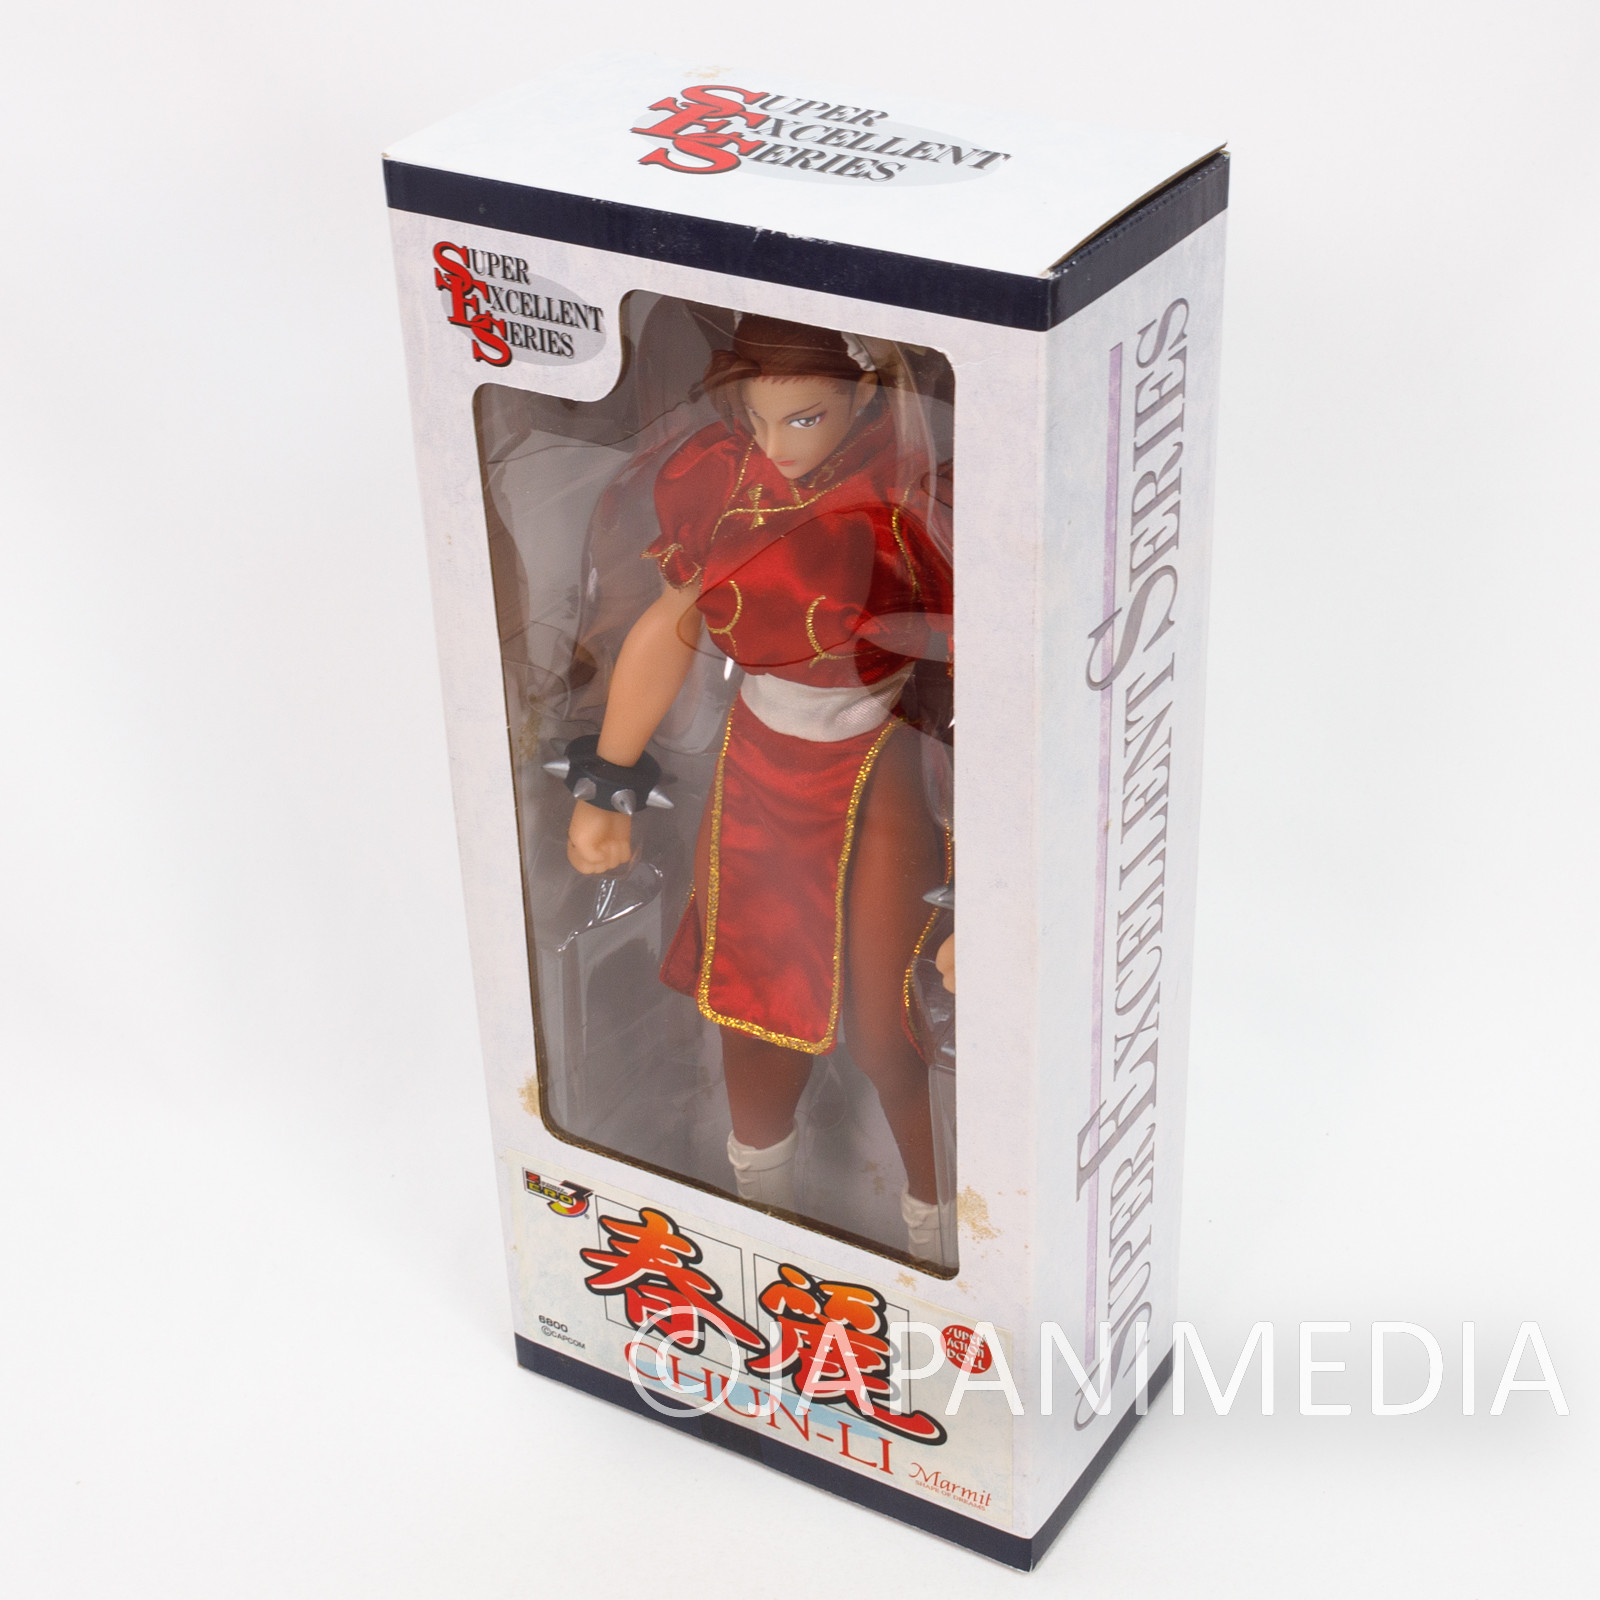 Street Fighter Chun-Li Red Figure Super Excellent Series Marmit Capcom JAPAN